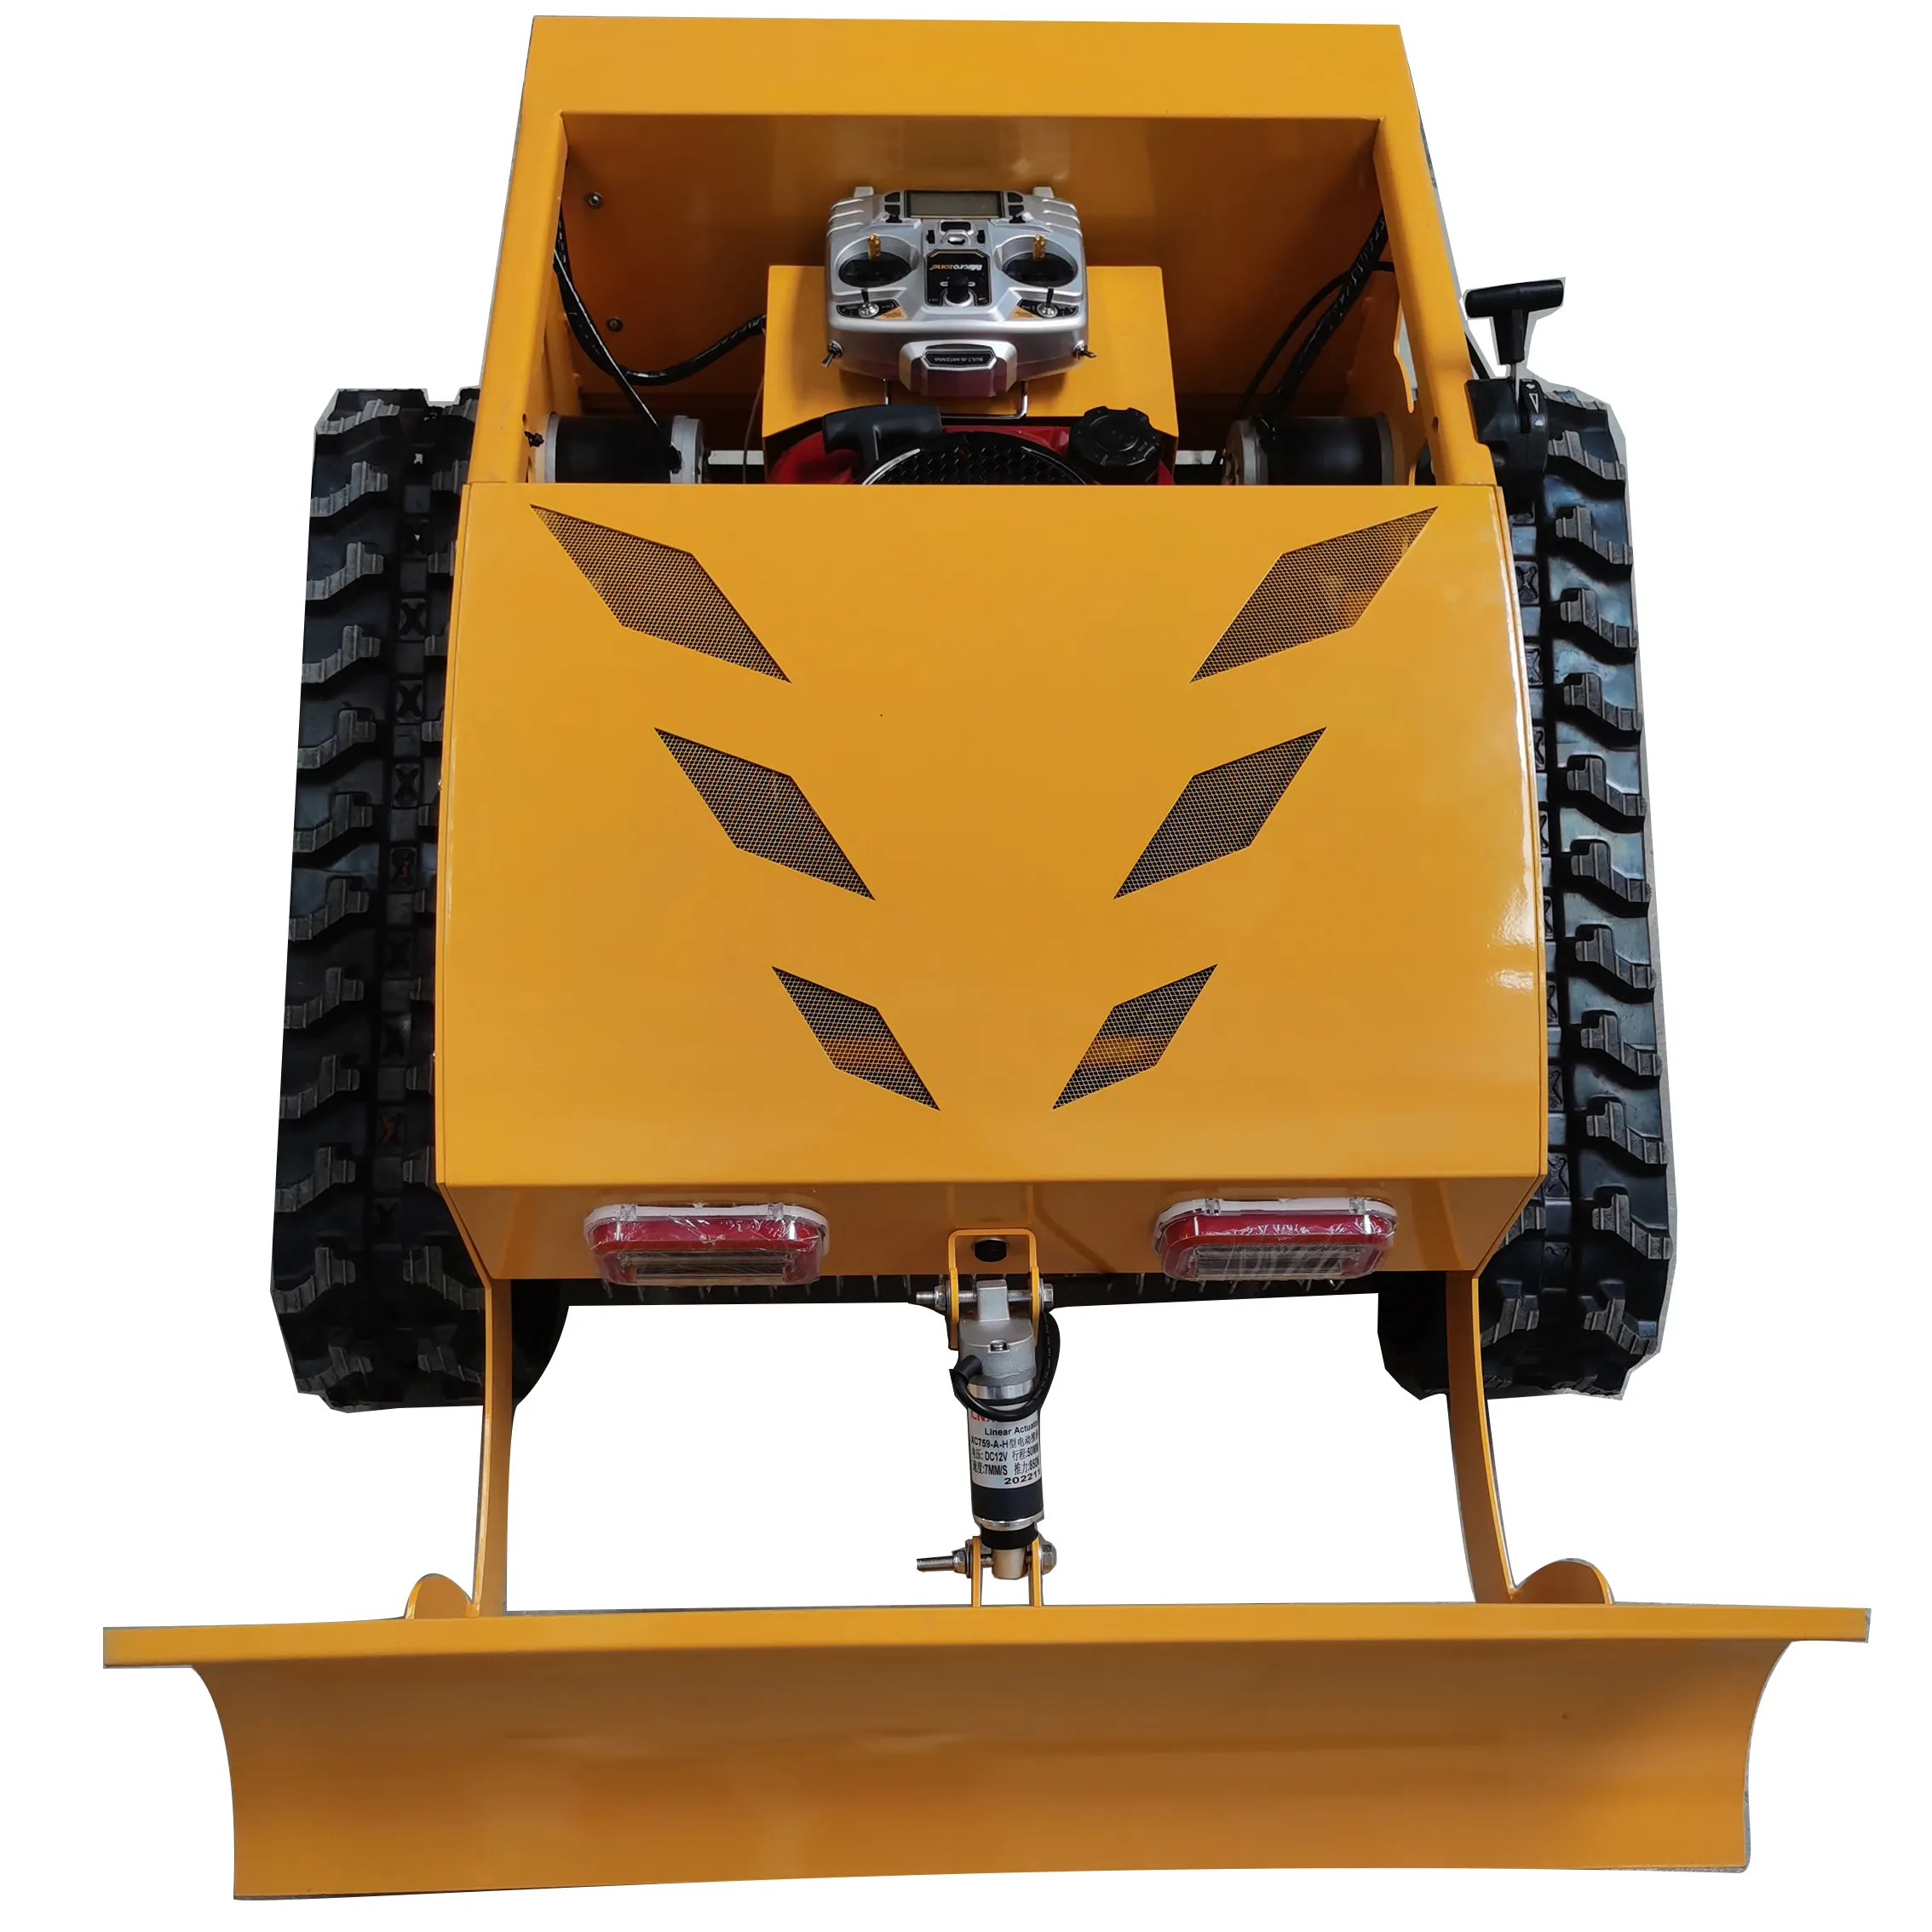 Wholesale Tires Wheel Lawn Mower Tractor Grass Mowers Zero Turn Forestry Machinery Diesel Crawler Lawn Mower